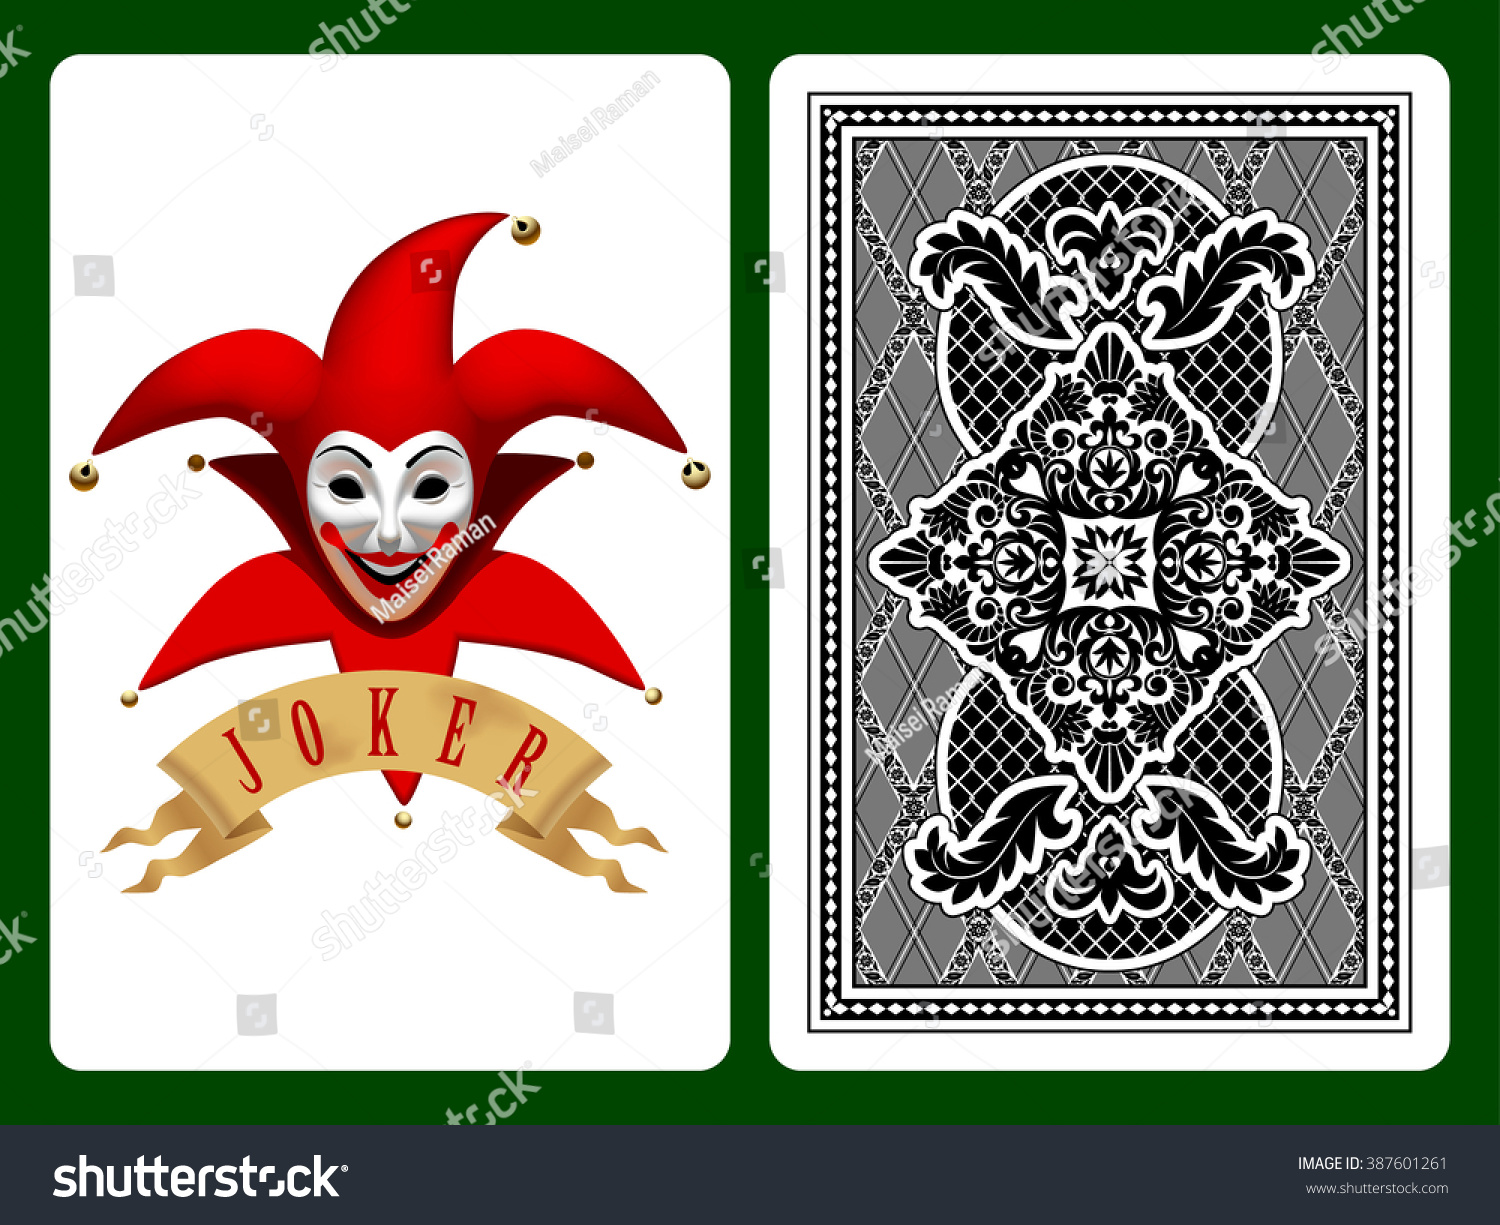 Red Joker Playing Card Backside Background Stock Illustration 387601261 ...